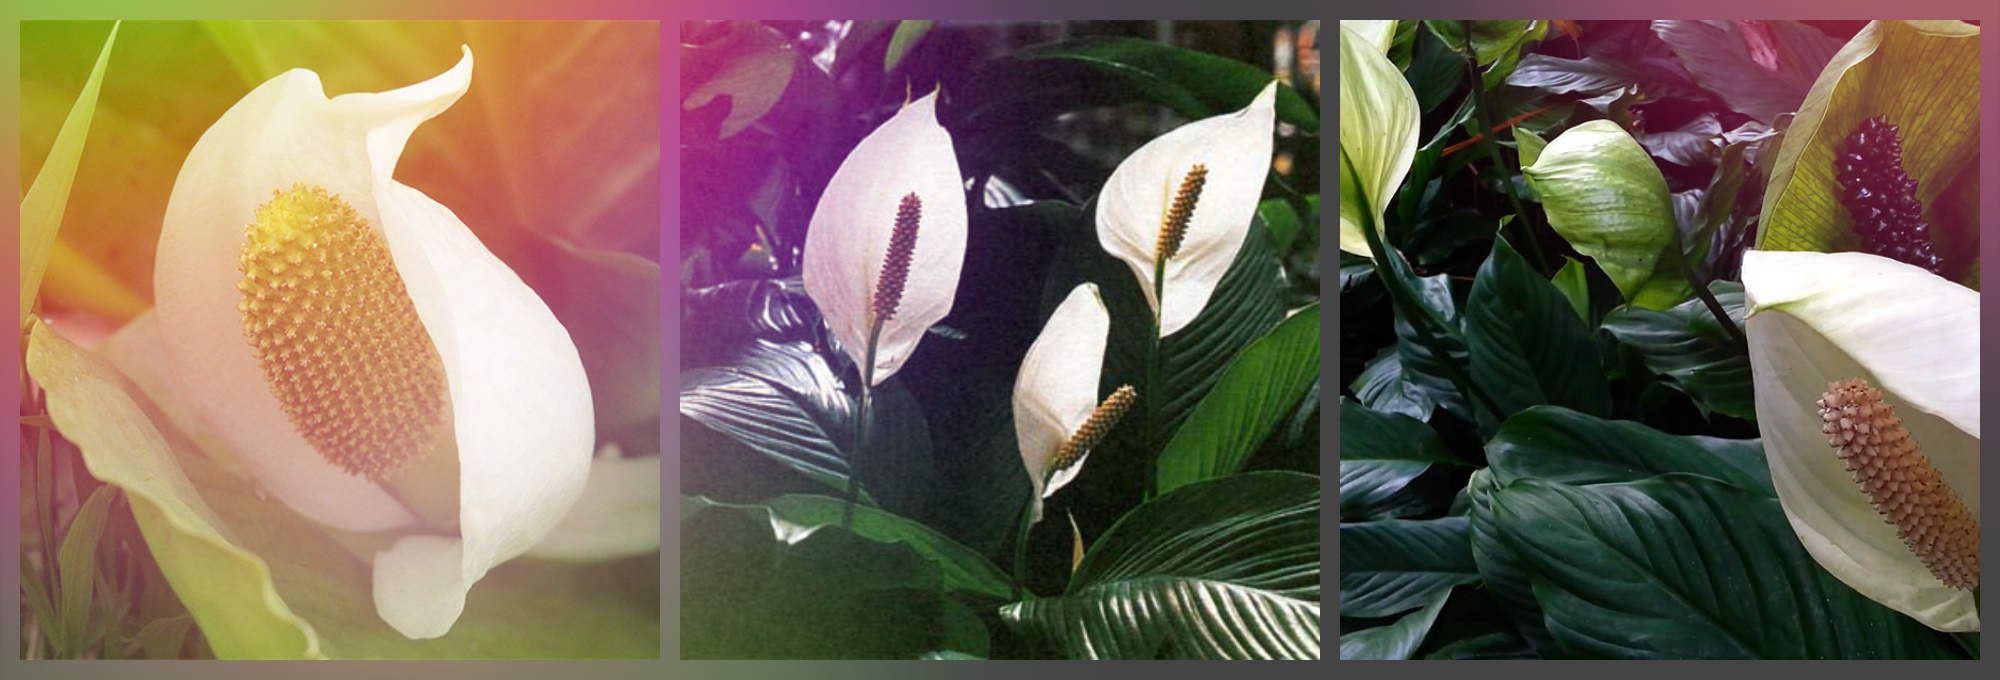 Спатифиллум - женский цветок счастья